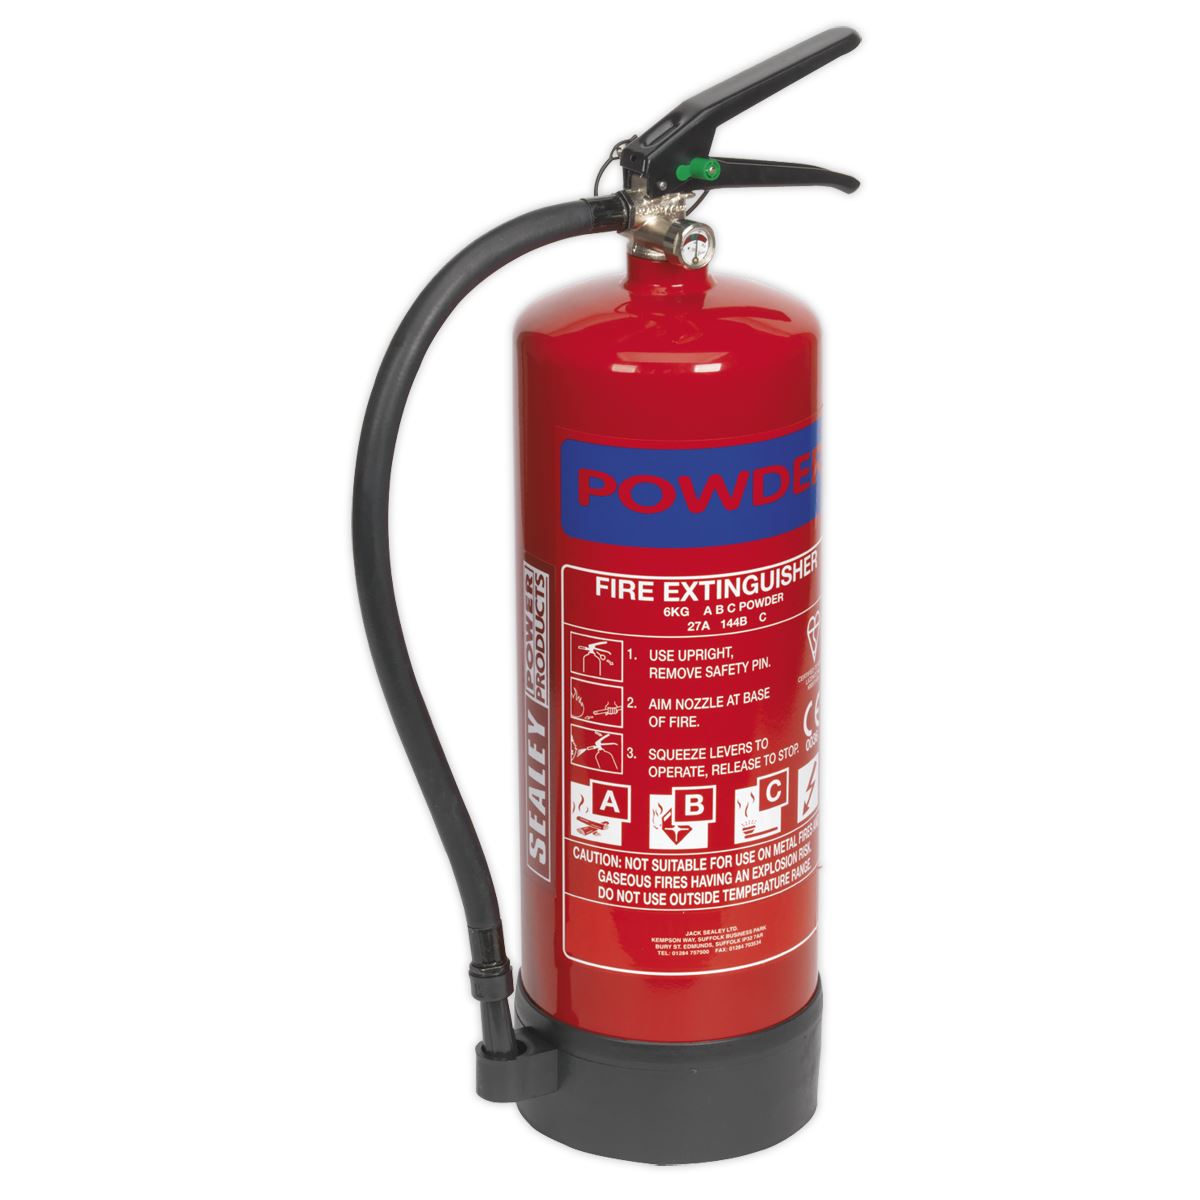 Sealey Fire Extinguisher 6kg Dry Powder